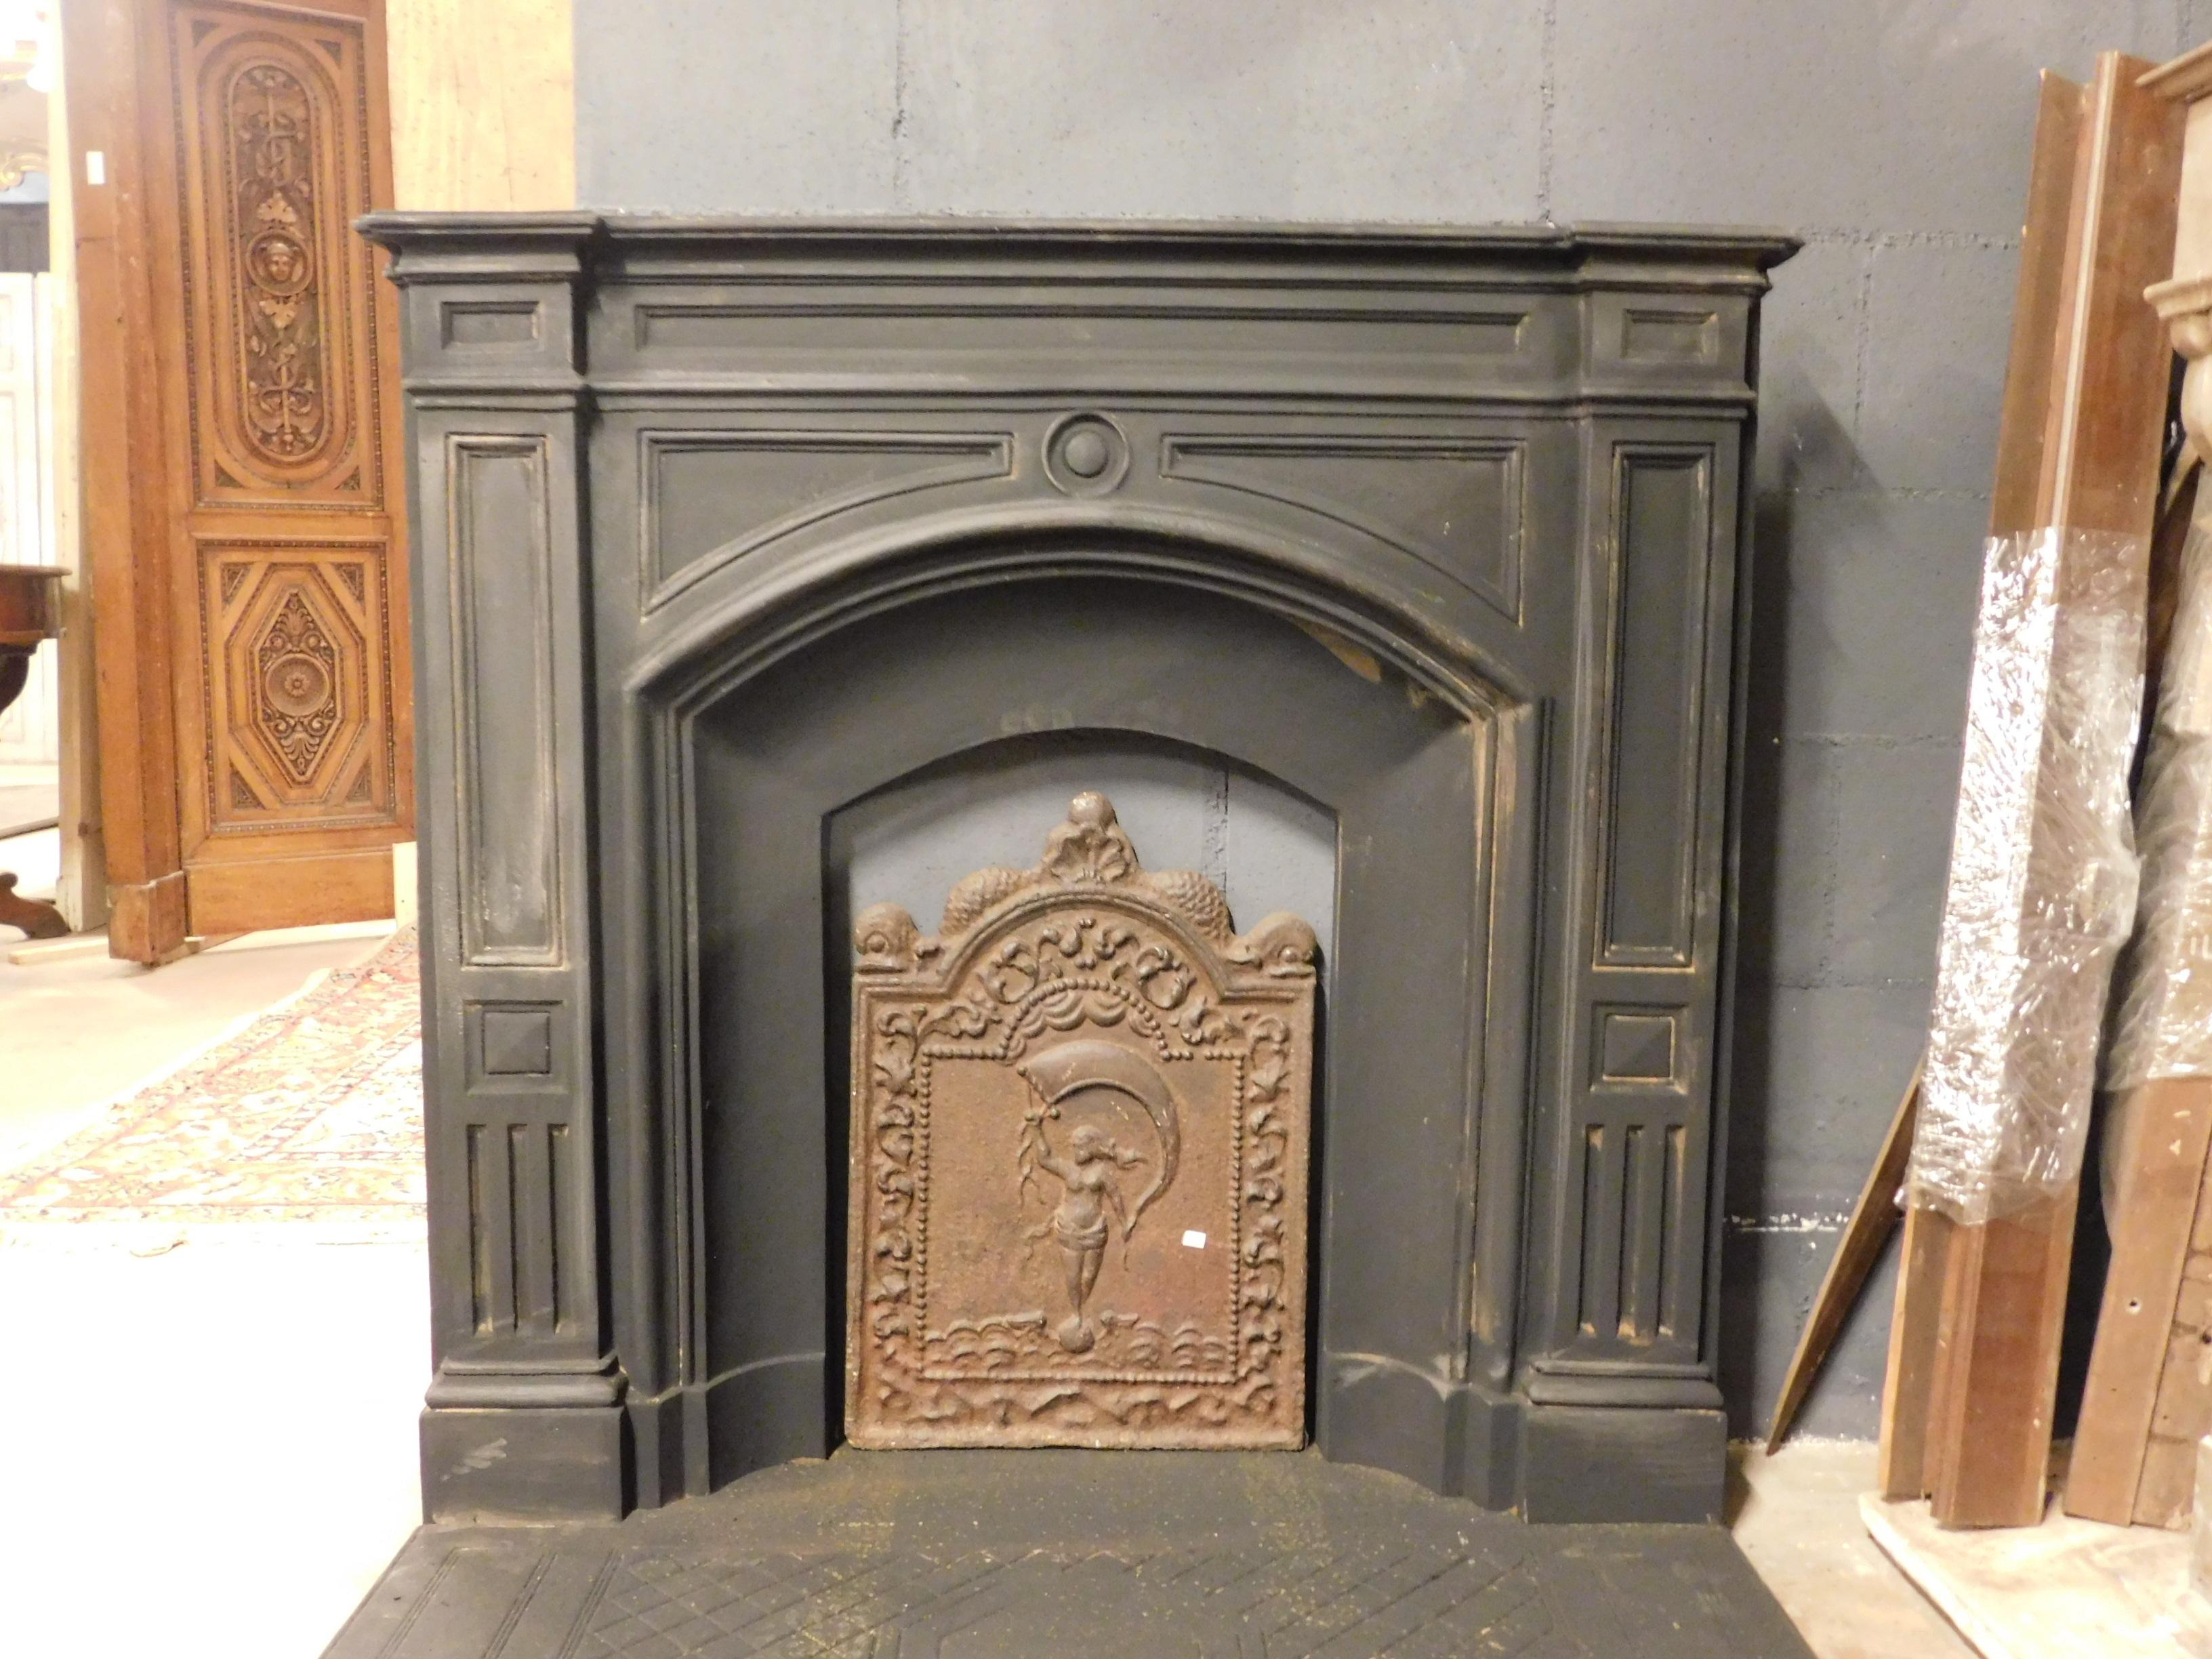 Ironstone Antique Cast Iron Fireplace Mantle, Black Iron & Wood, Late 19th Century England